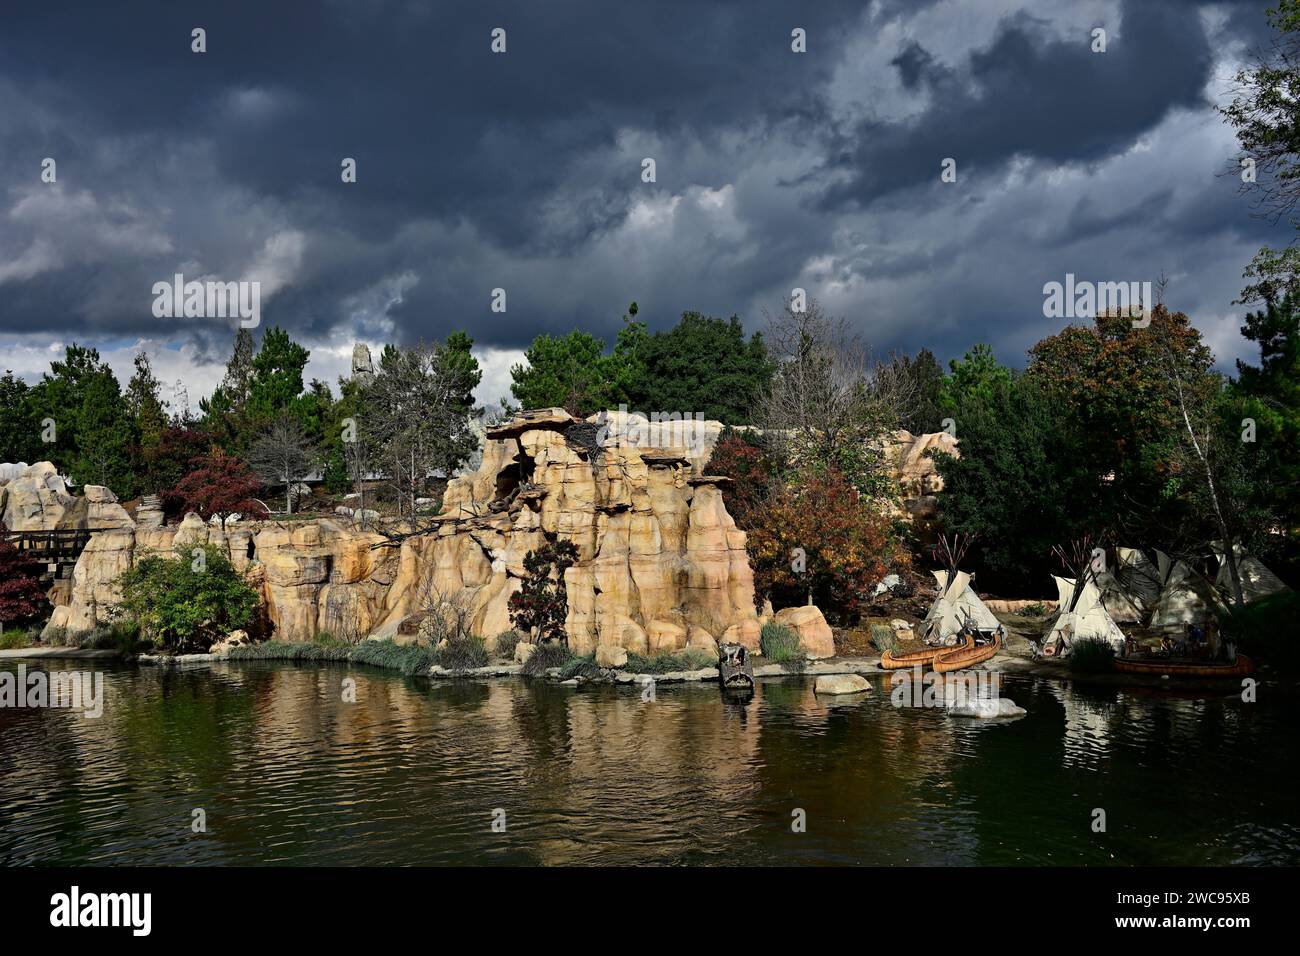 Cloud Over Indian Reserve - Disneyland Park Stock Photo